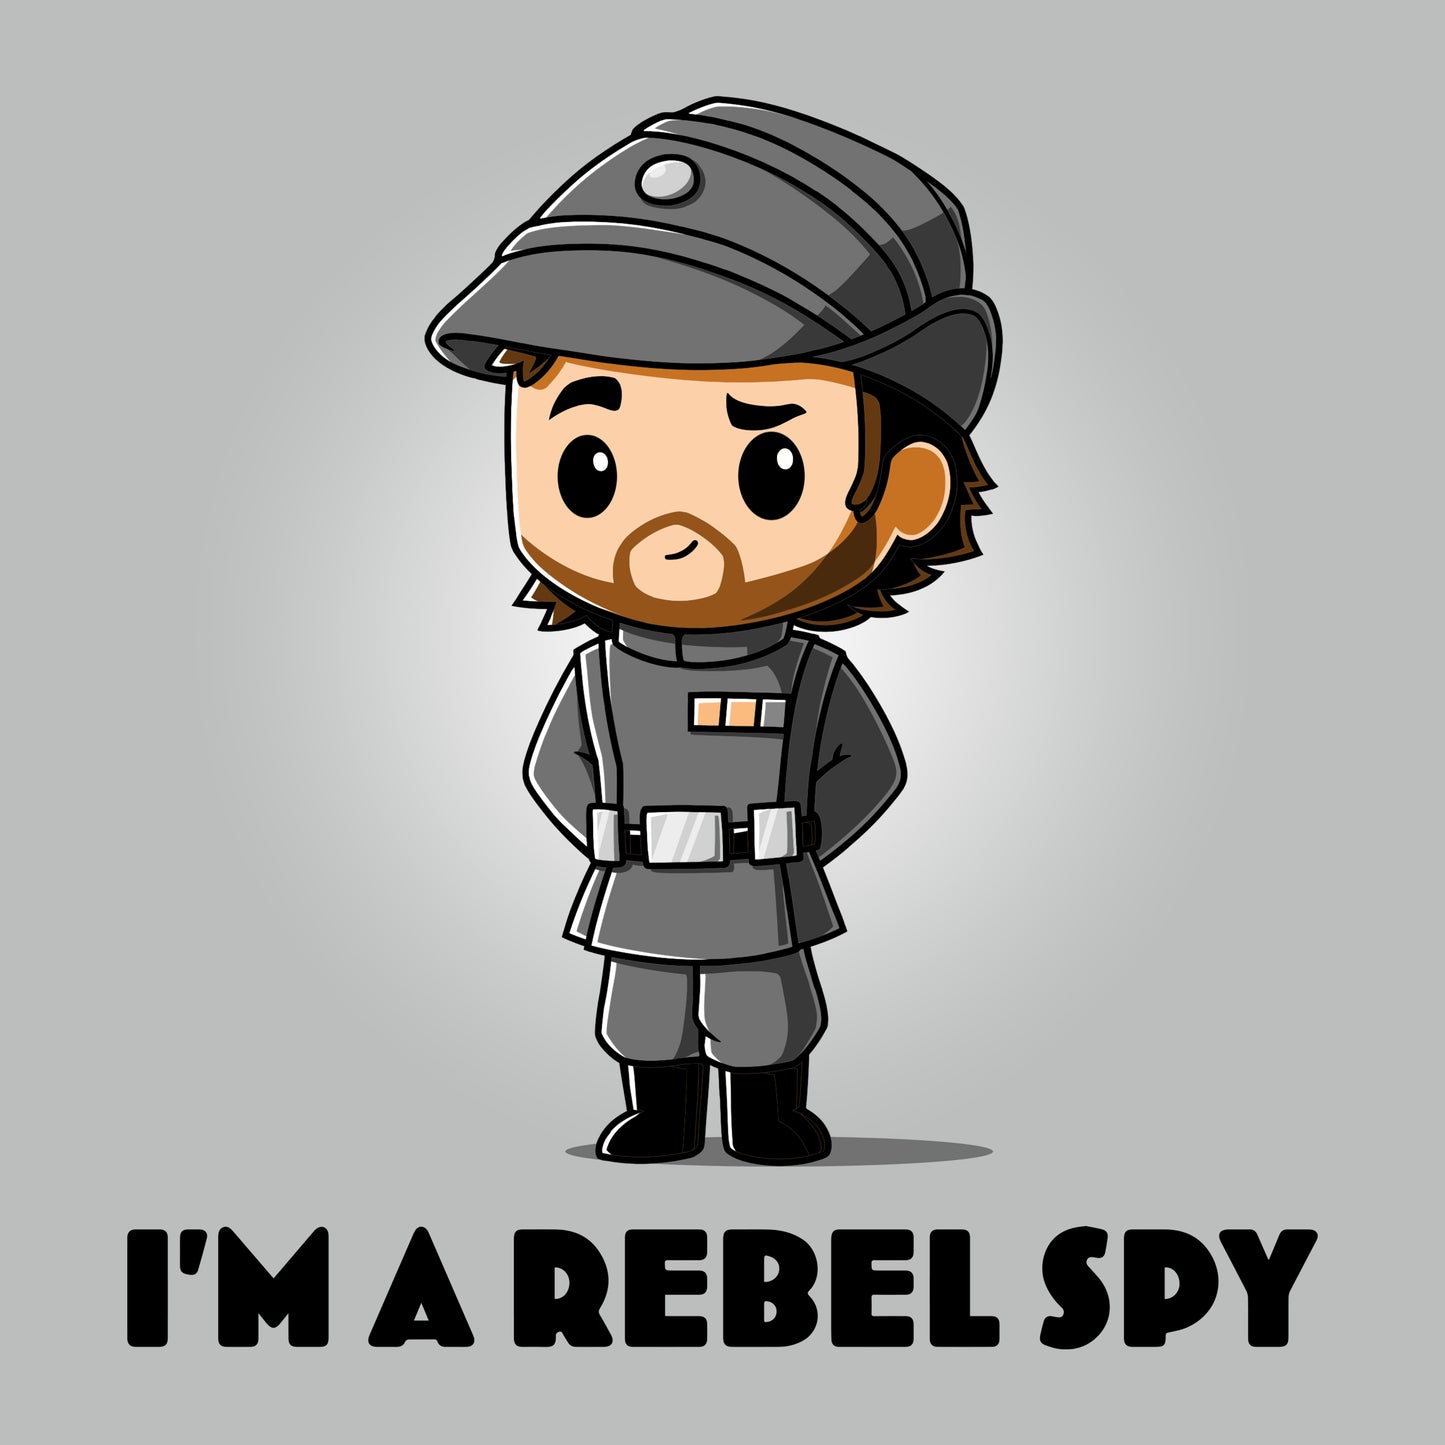 Officially licensed Star Wars Rebel Spy.